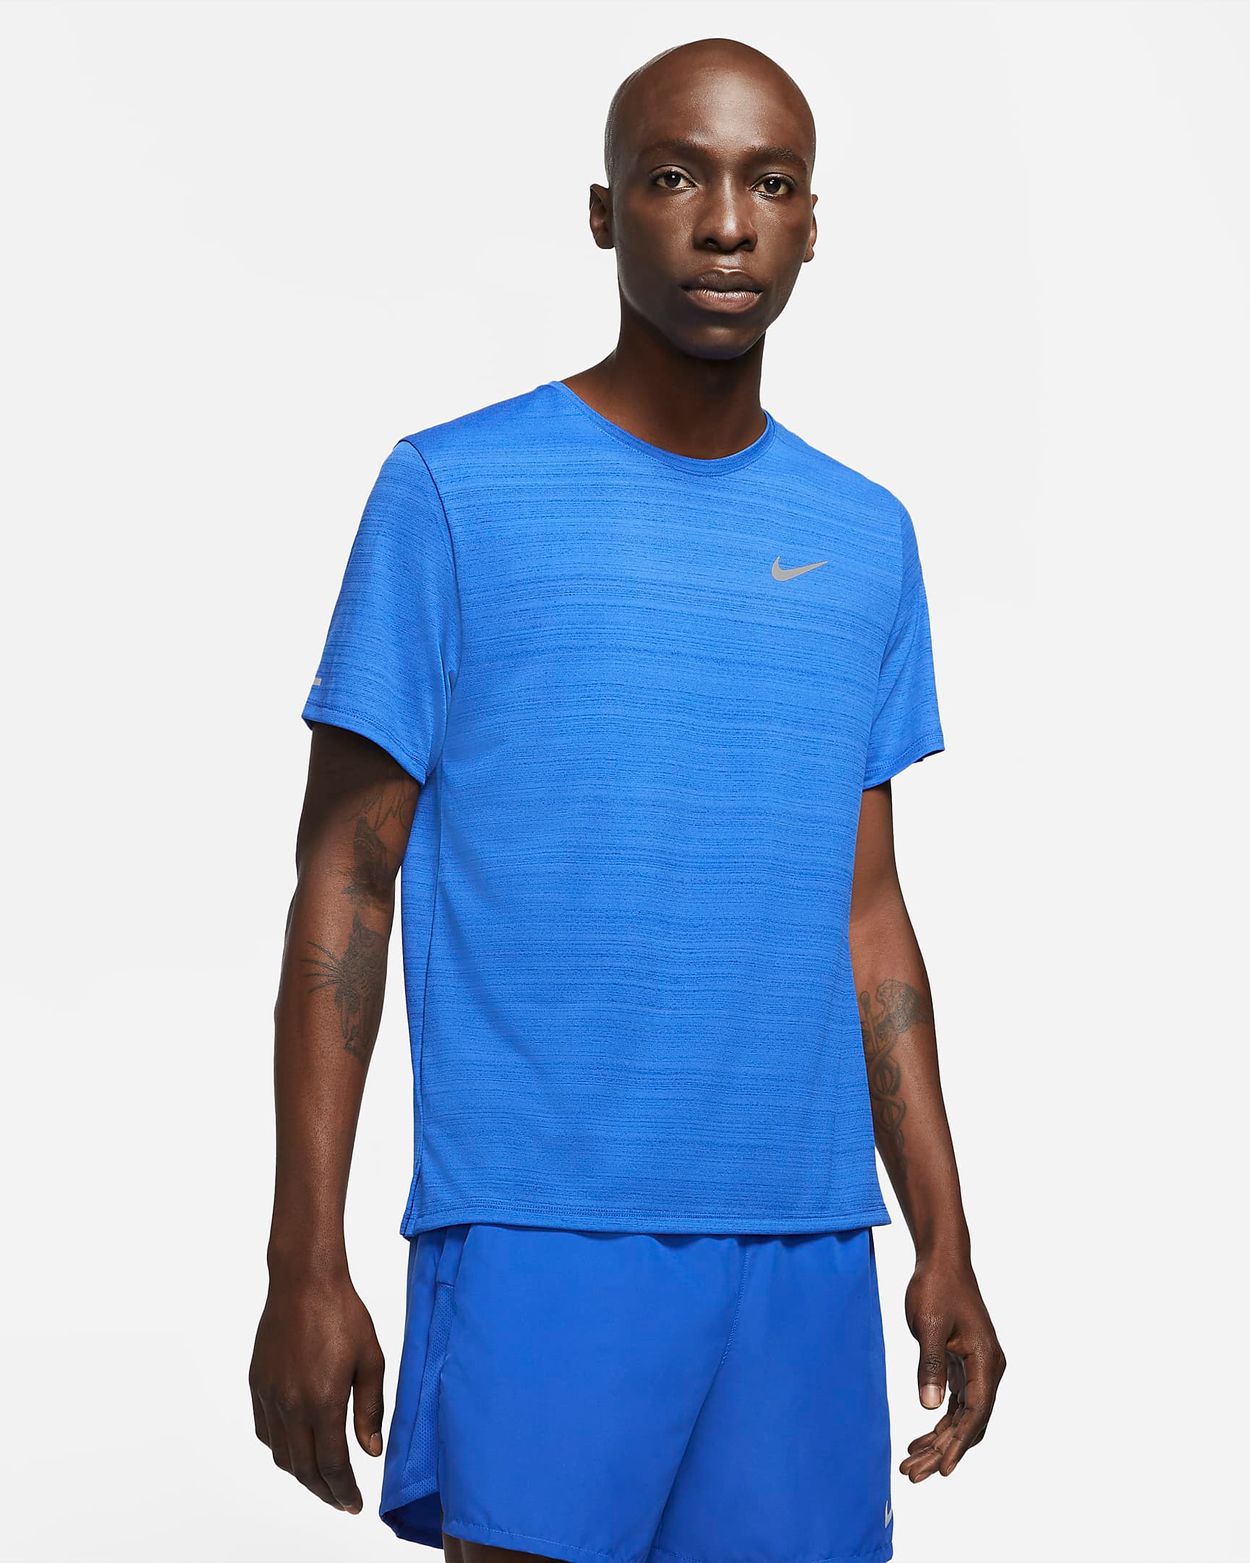 2022 Summer Brand Clothing Fitness Running T Shirt Men O-Neck T